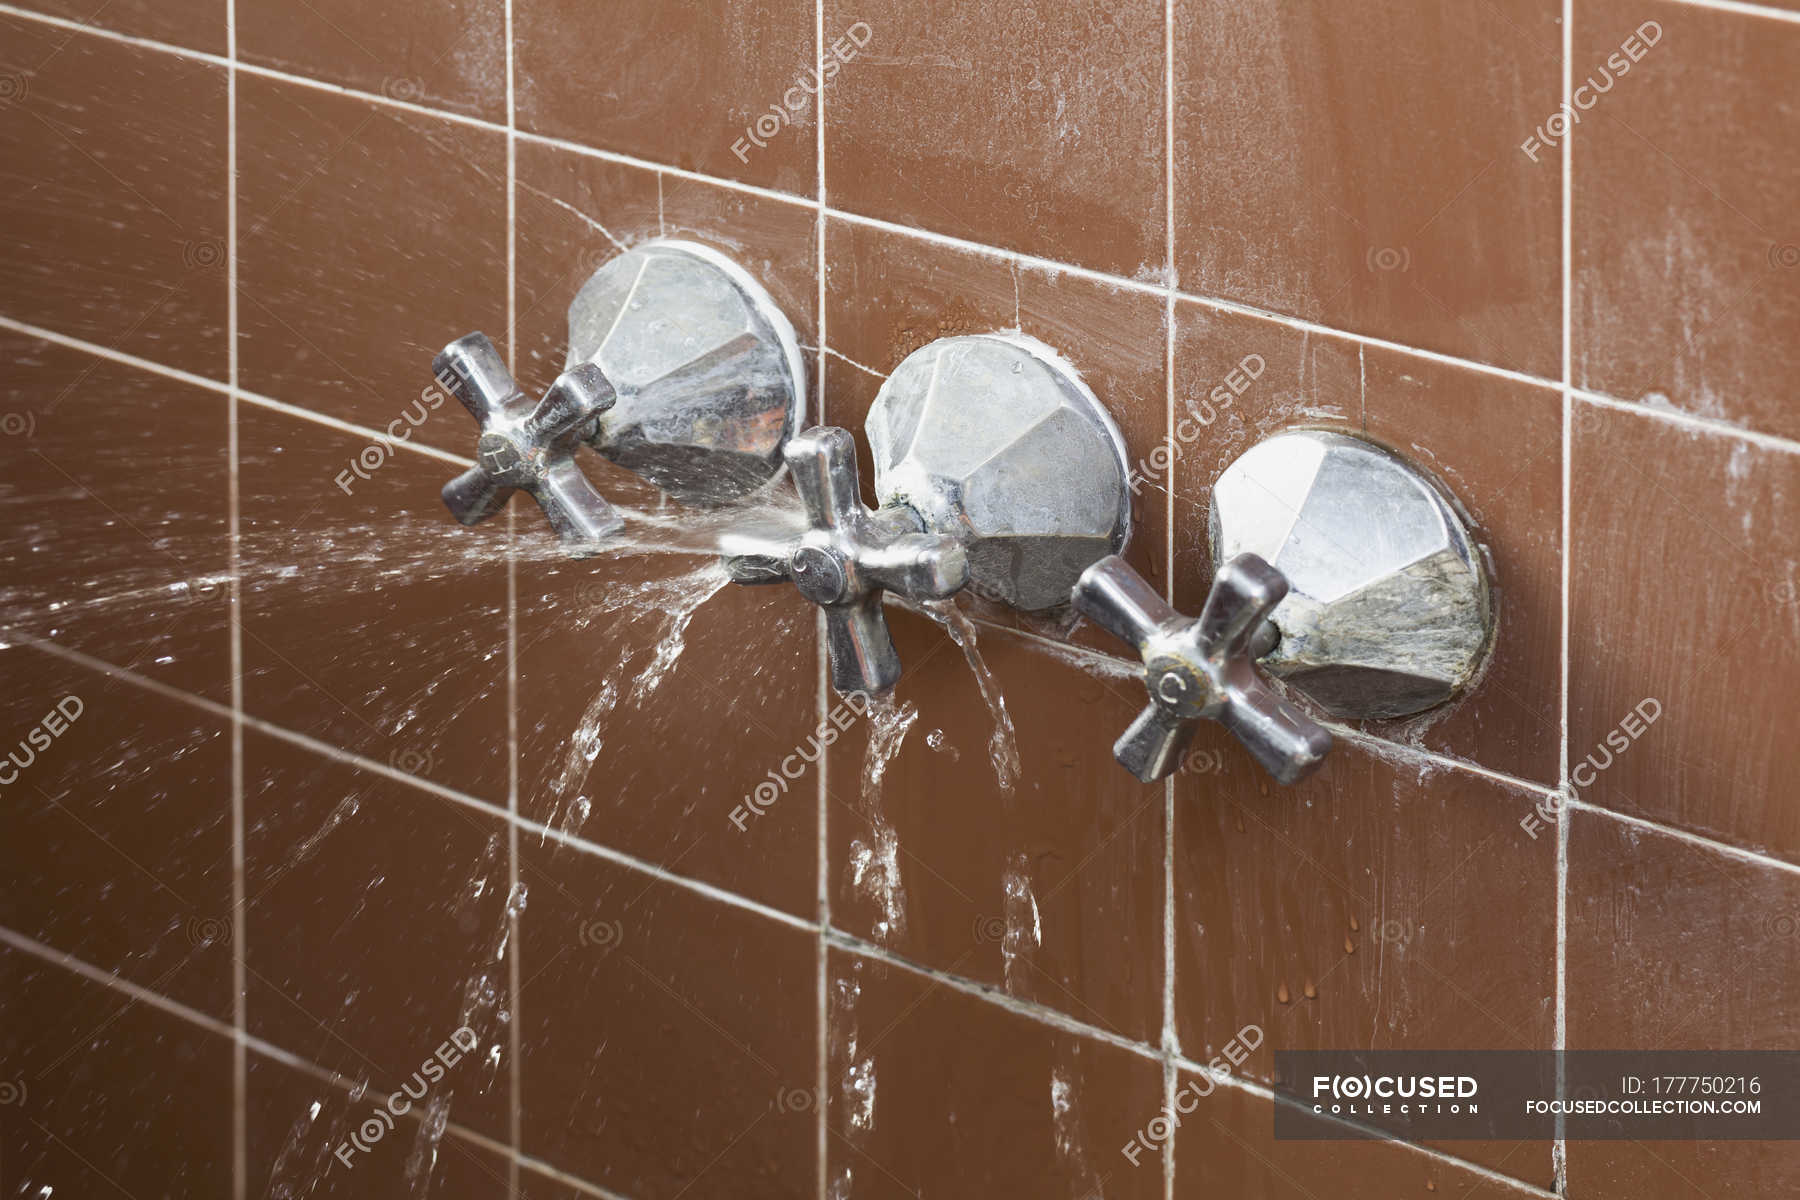 Broken Shower Faucet Handle Spraying Leaking Water Ideas Focus